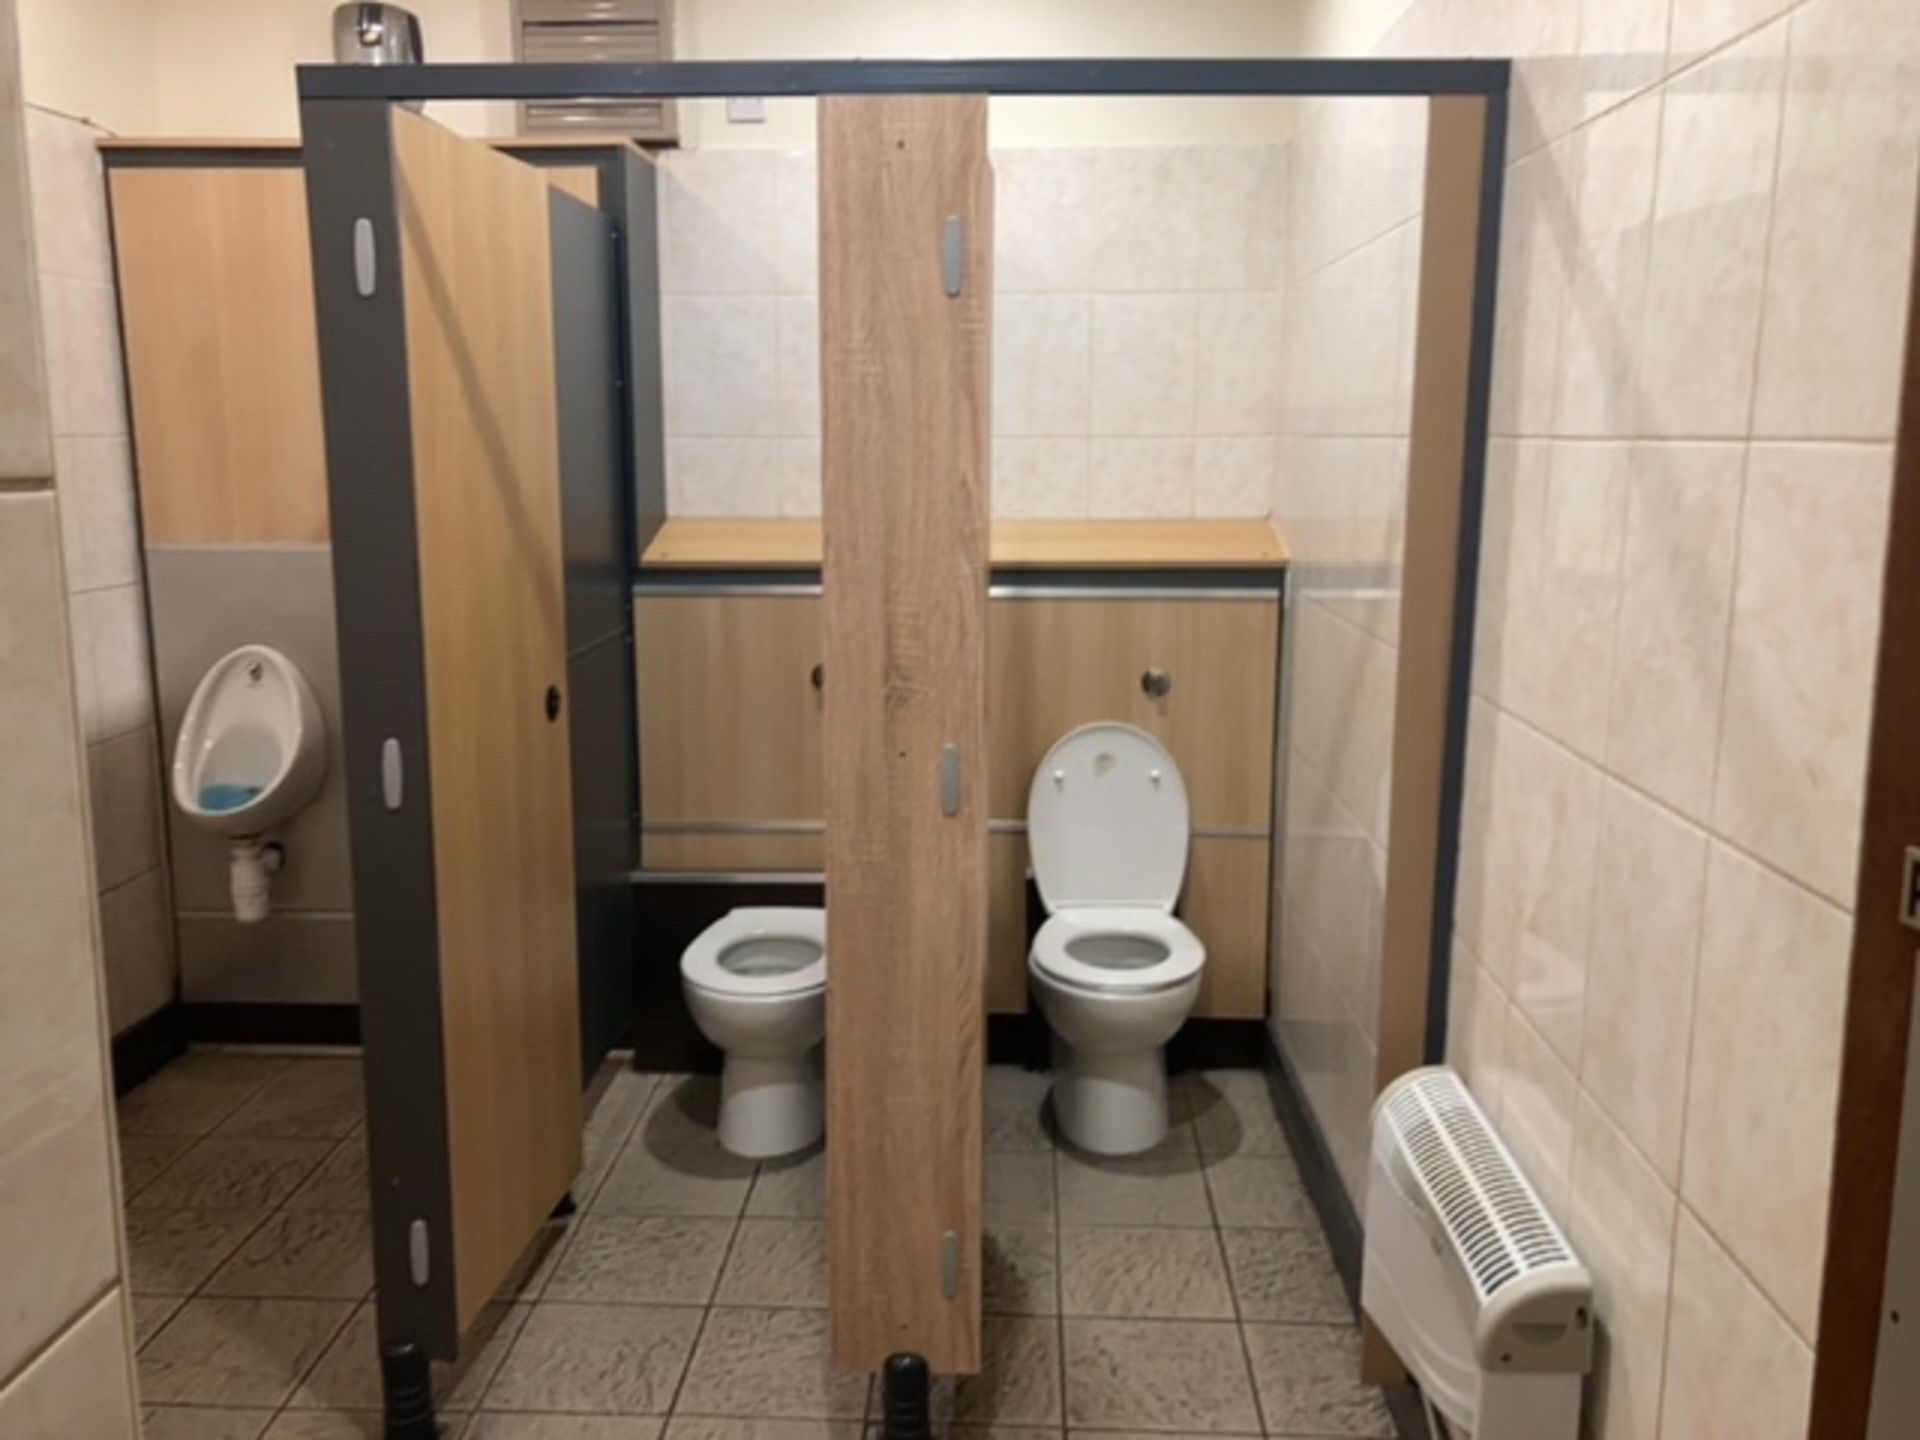 Gents toilet - Image 2 of 3